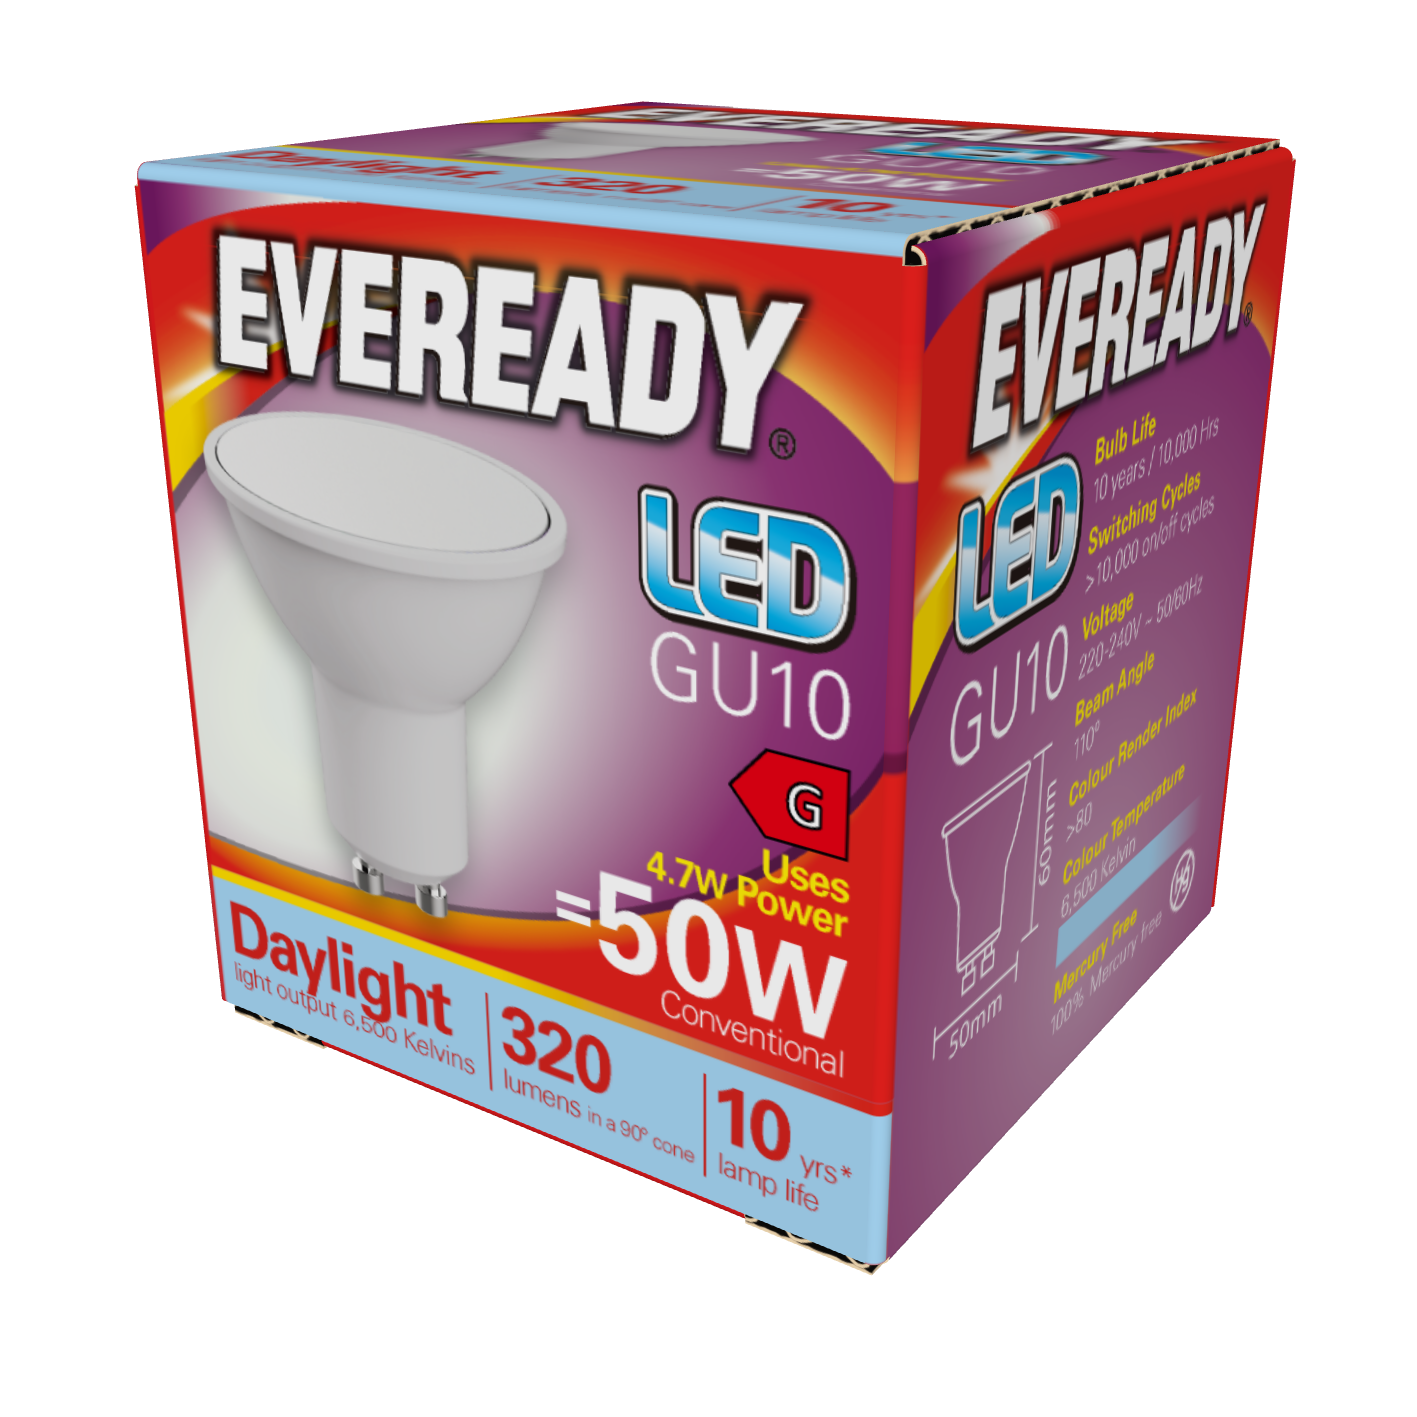 Eveready LED GU10 320lm 4.7W 6,500K (Daylight), Box of 1